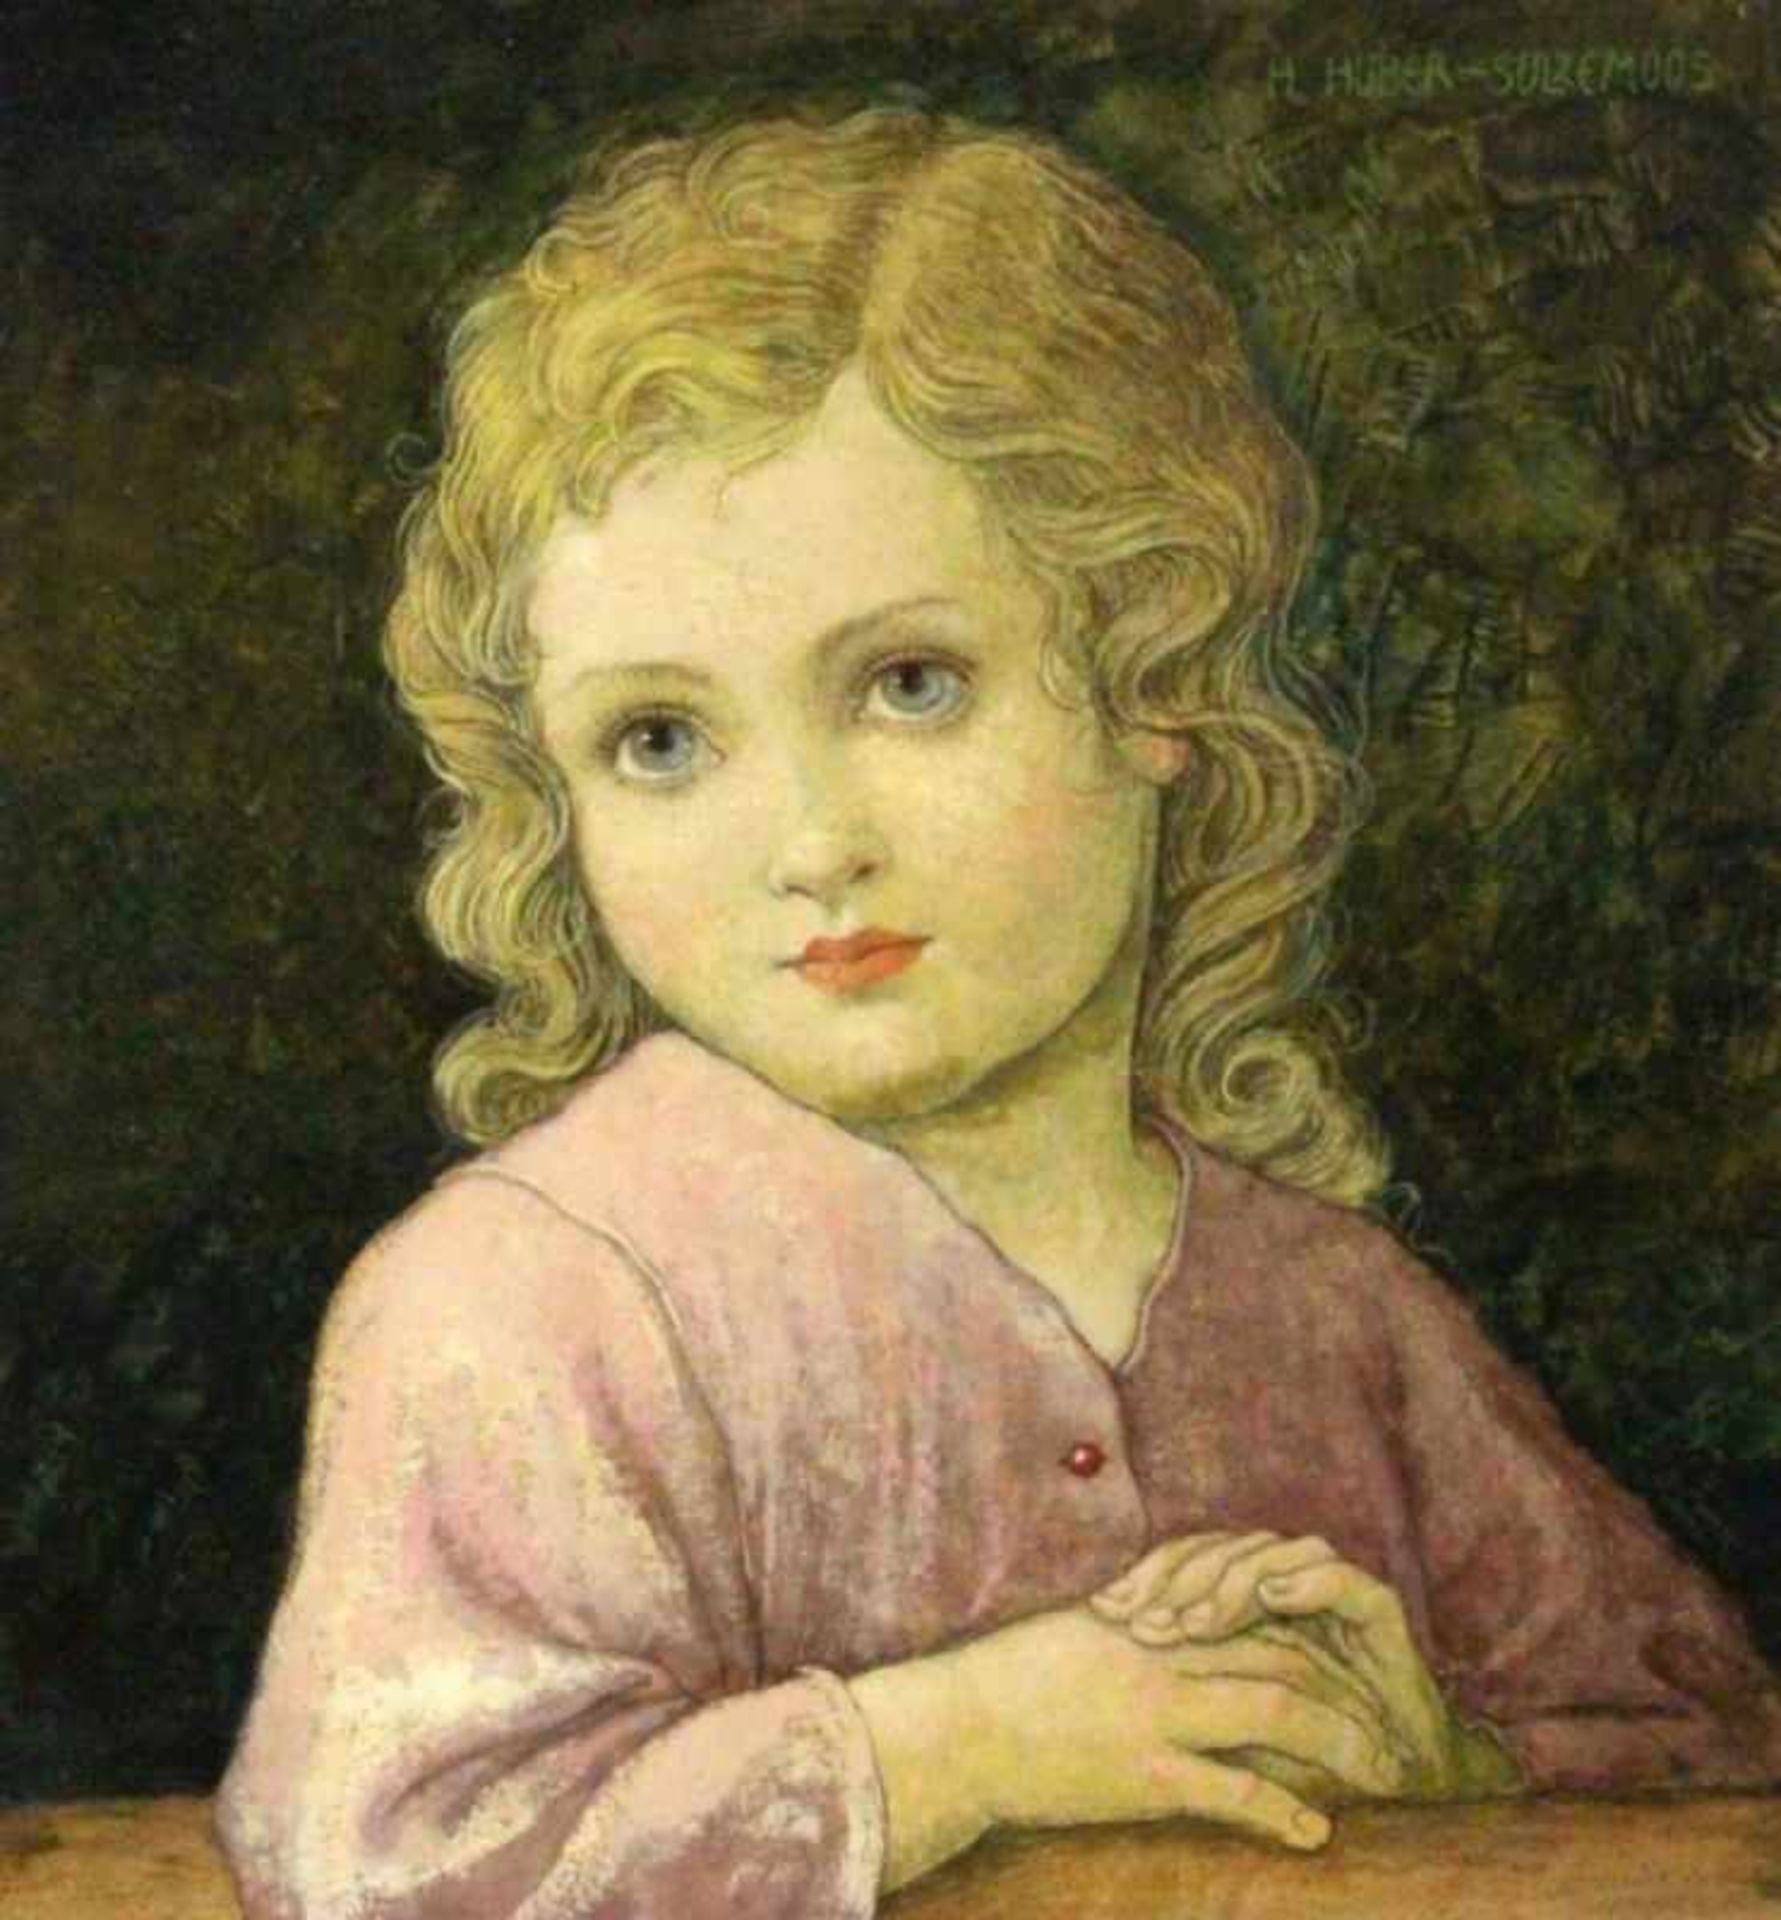 HUBER-SULZEMOOS, HANS Sulzemoos 1873 - 1951 München Kinderportrait. Öl/Papier auf Holz, signiert.